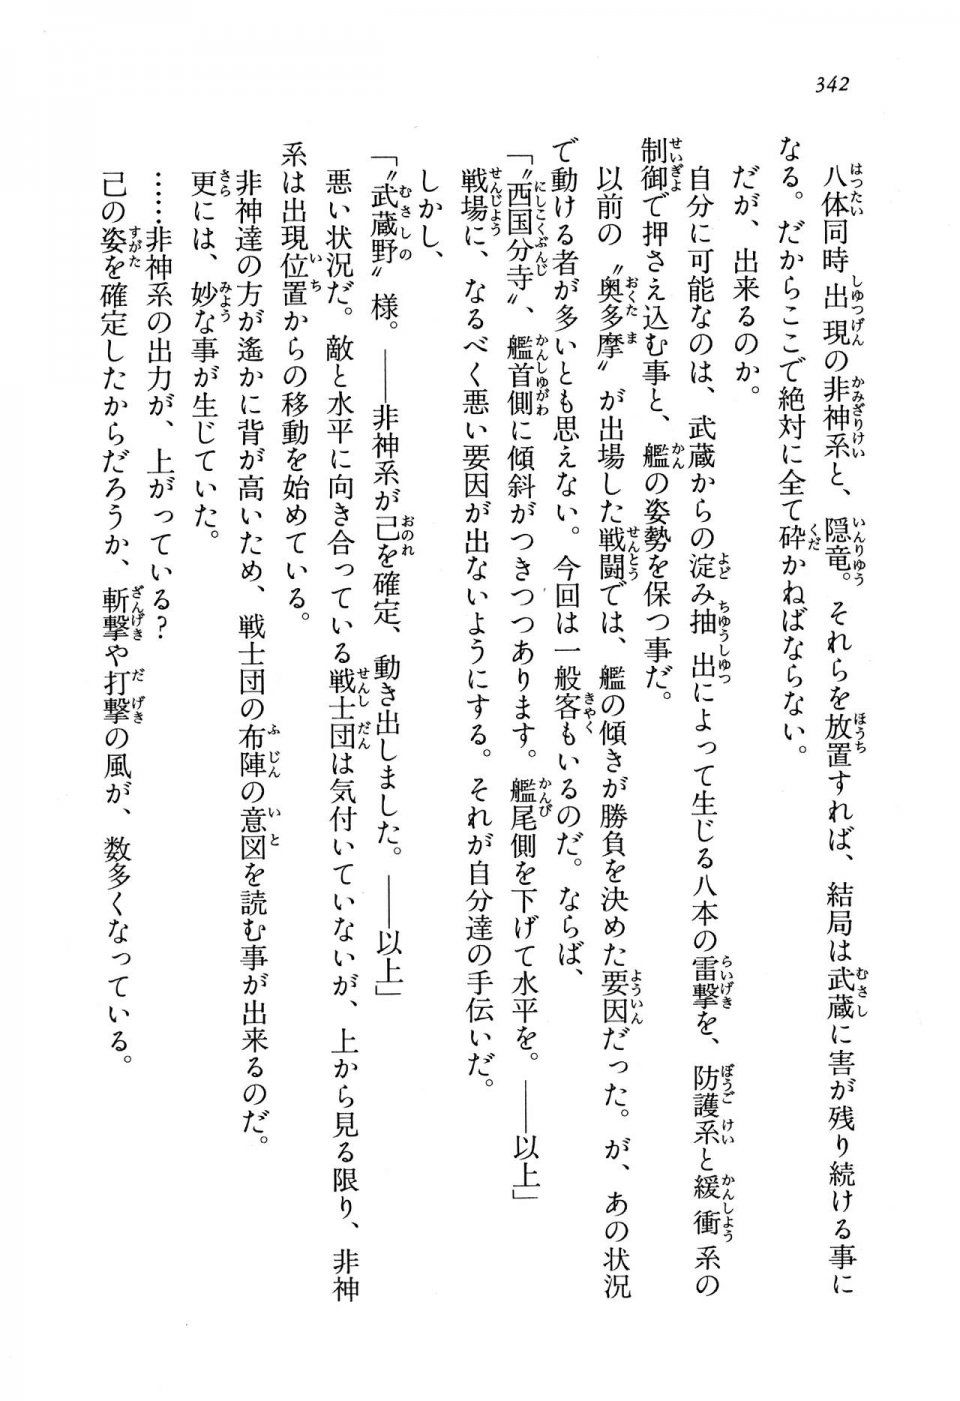 Kyoukai Senjou no Horizon BD Special Mininovel Vol 8(4B) - Photo #346